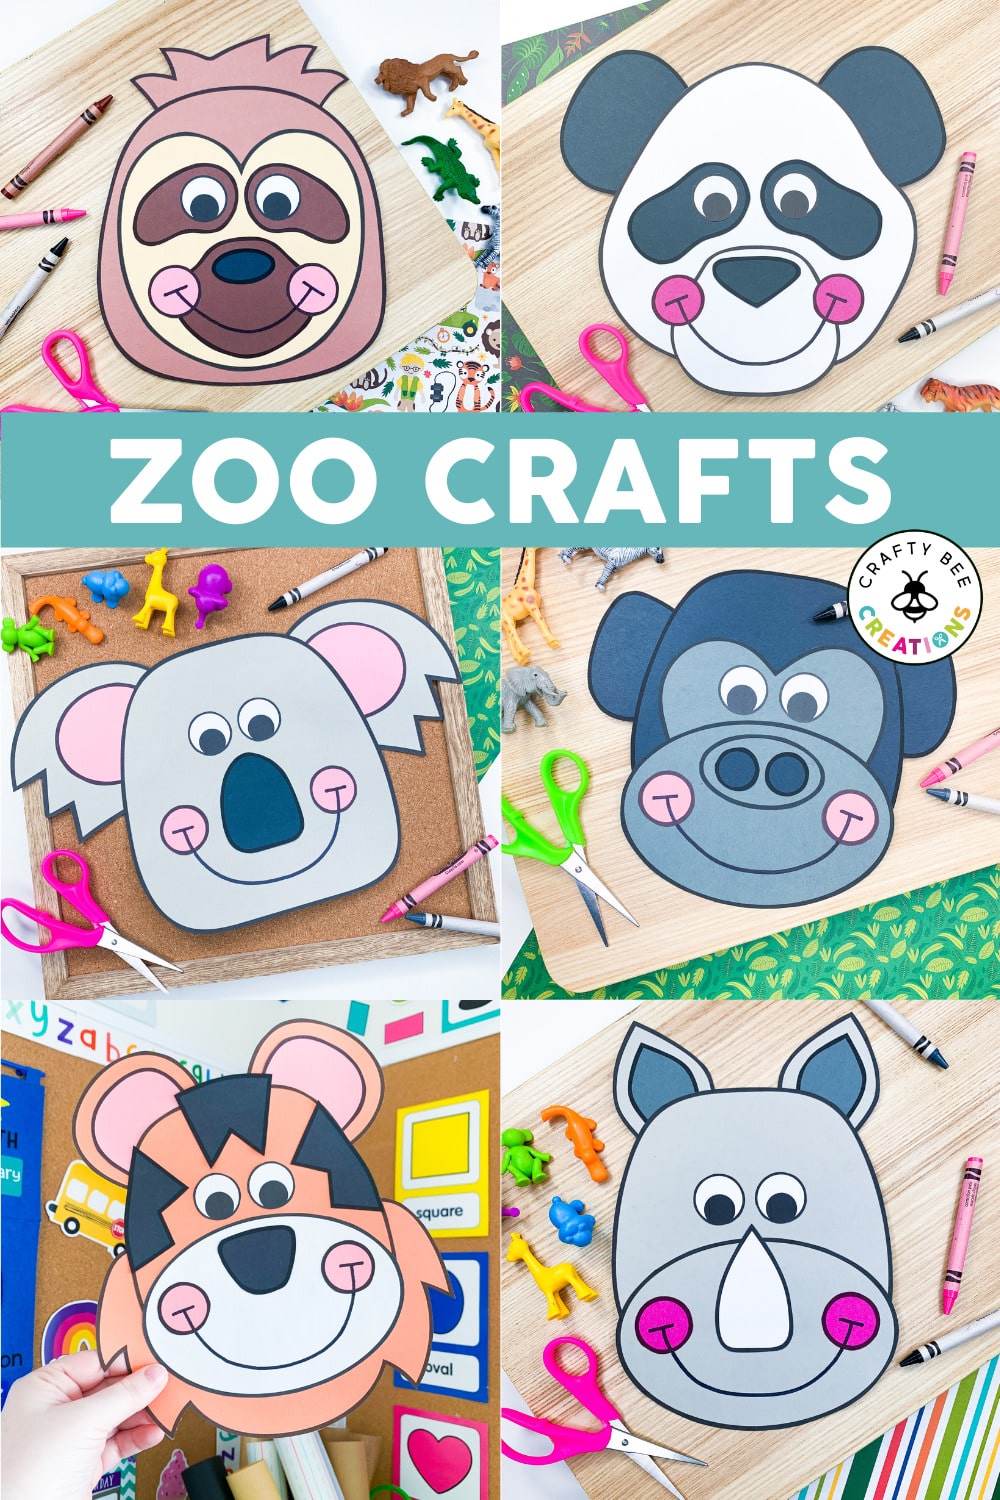 https://craftybeecreations.com/wp-content/uploads/2021/06/Zoo-Crafts-Bundle-2-Blog-Post-Featured-Image.jpg